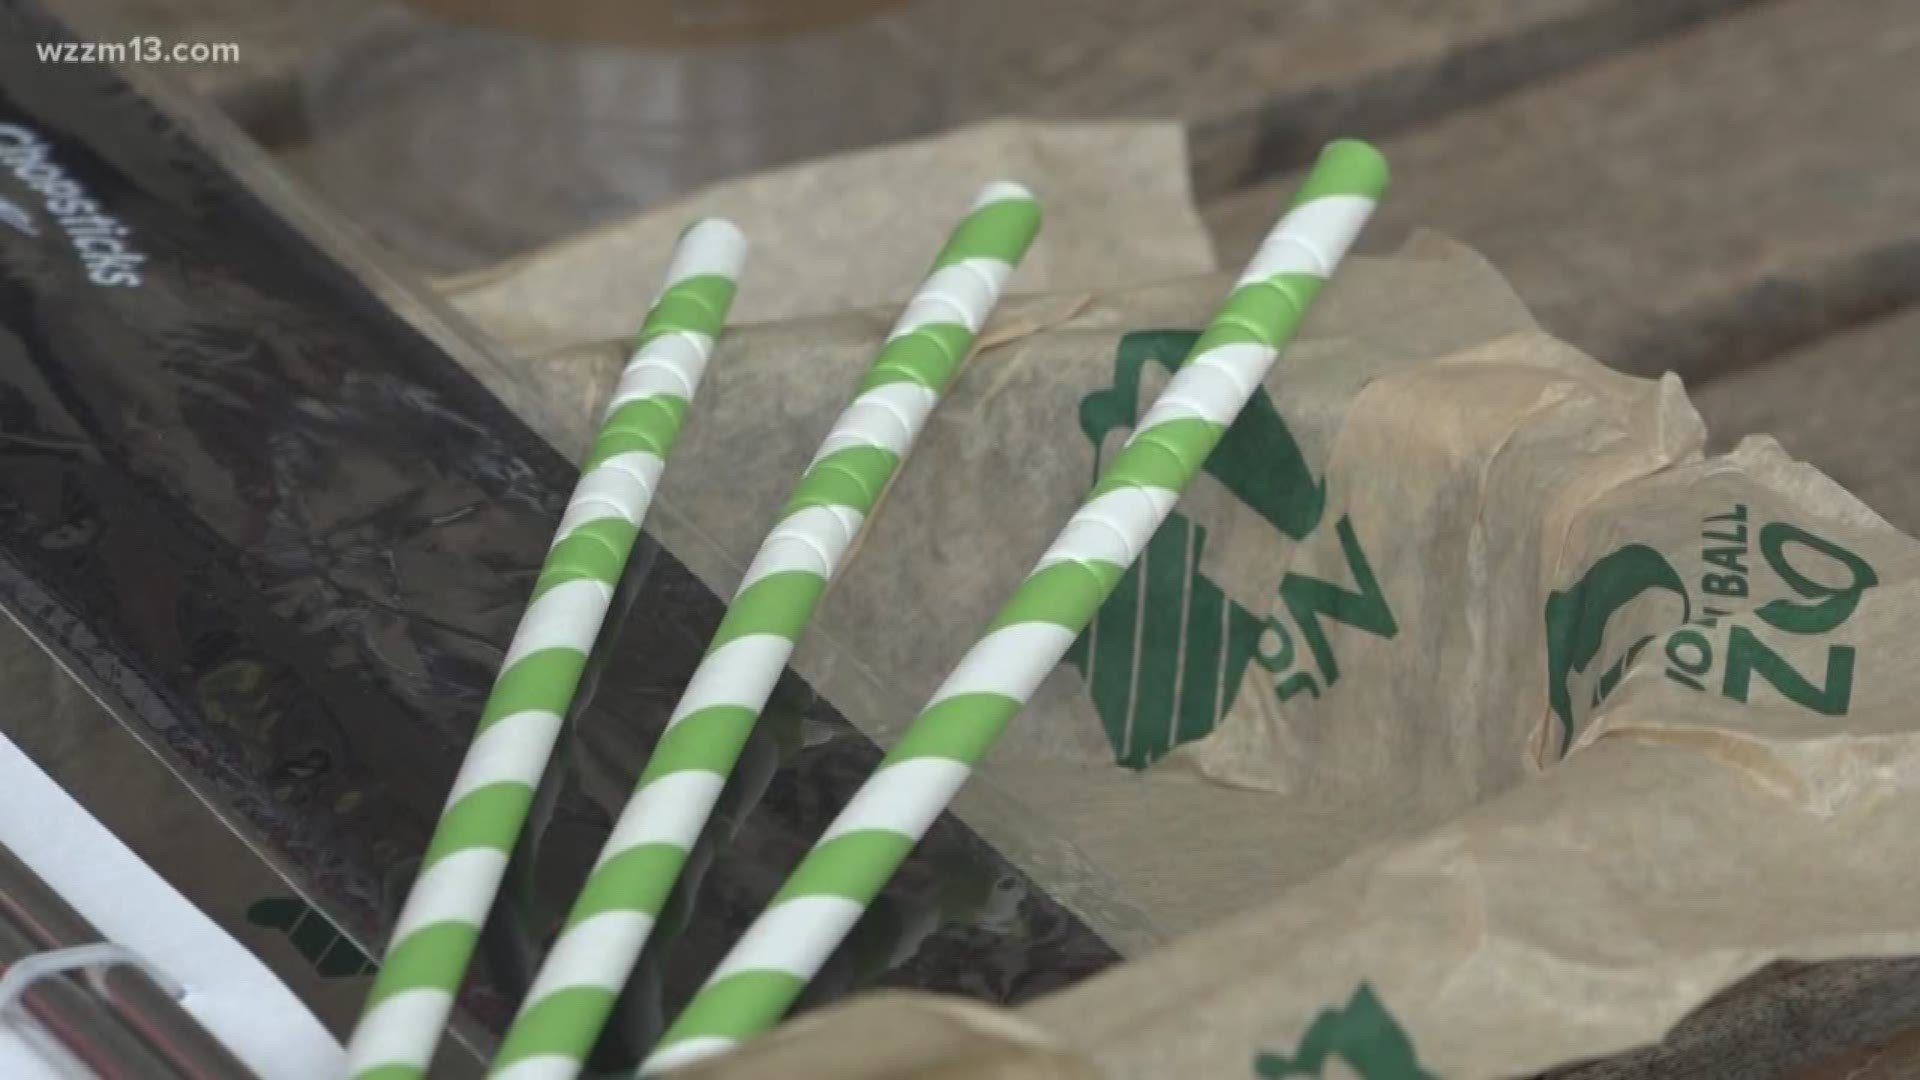 No more plastic straws for JBZ